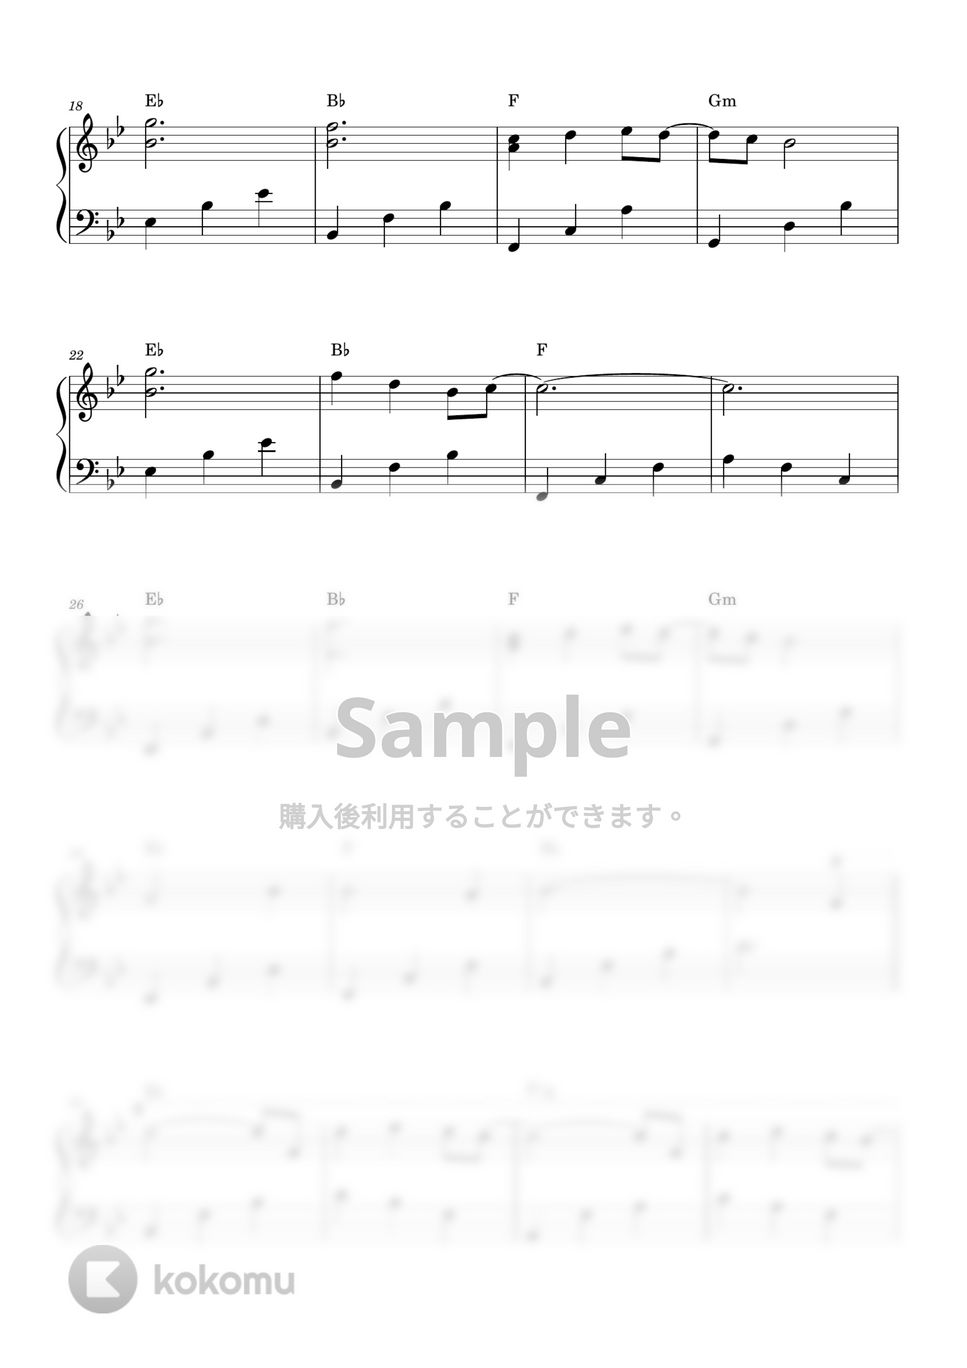 steve raiman - Songbird (やさしいピアノ演奏曲) by POLYPiano